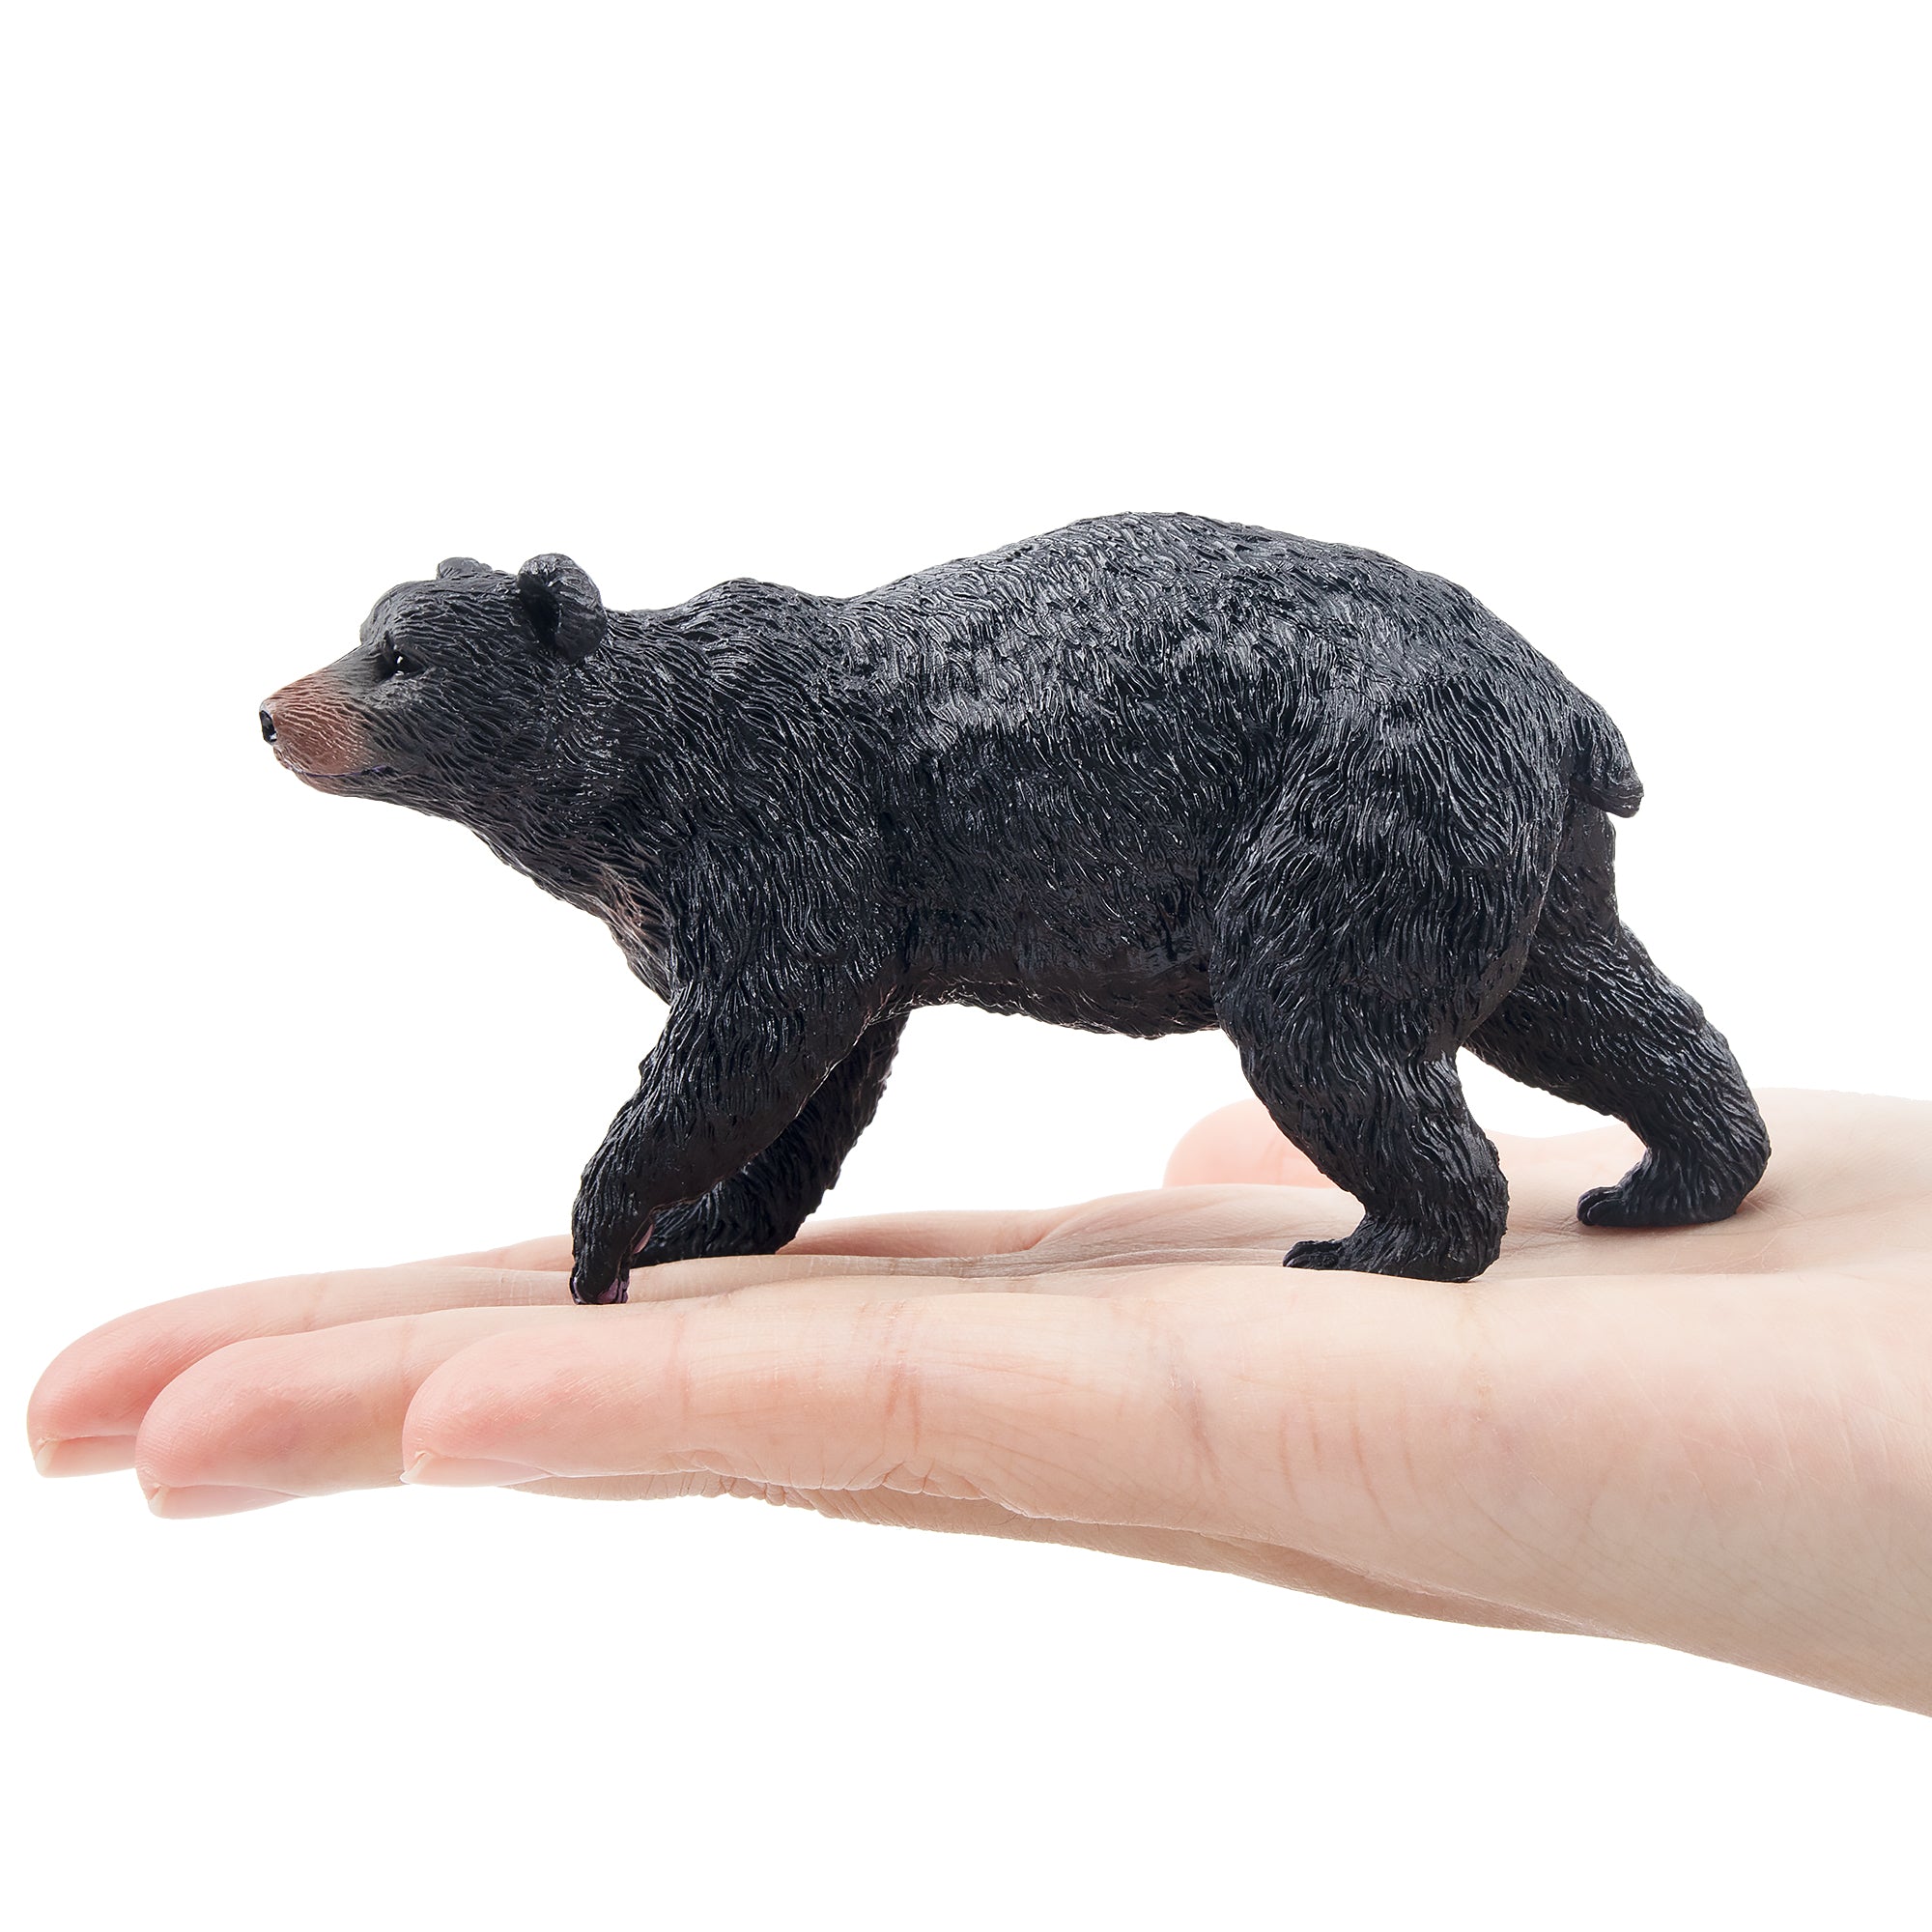 Toymany Black Bear Figurine Toy-on hand